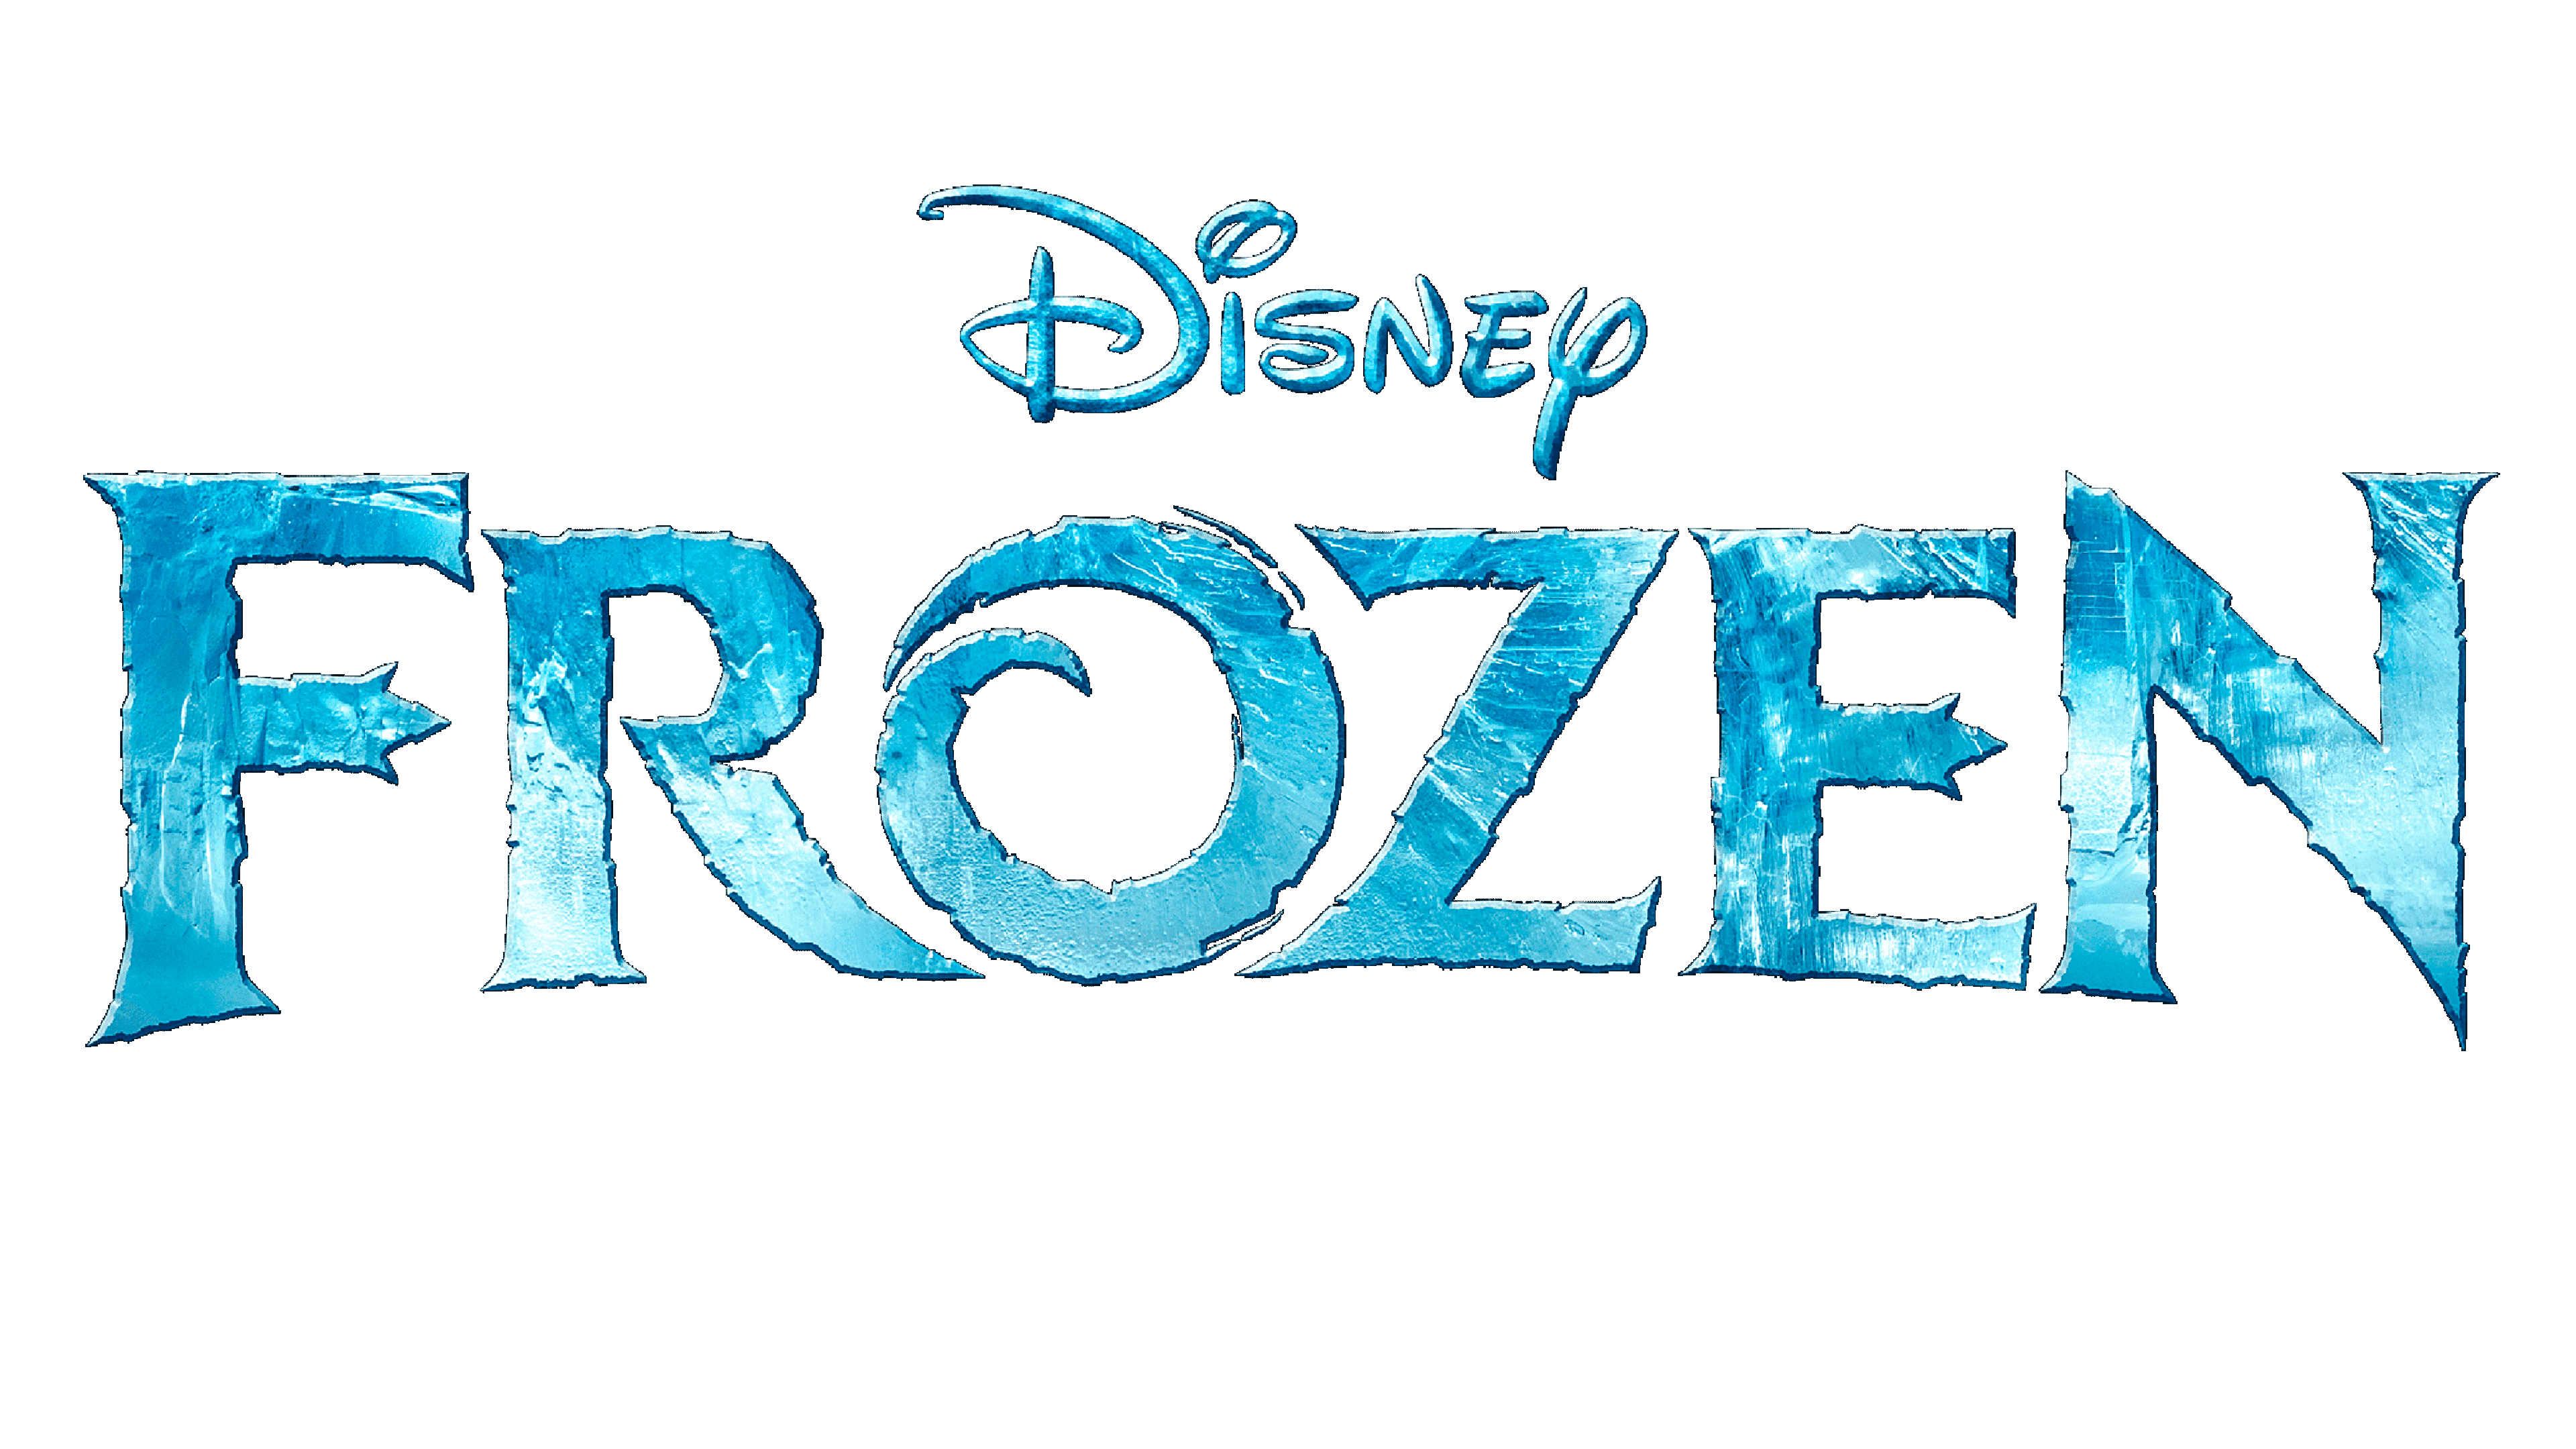 disney frozen logo png